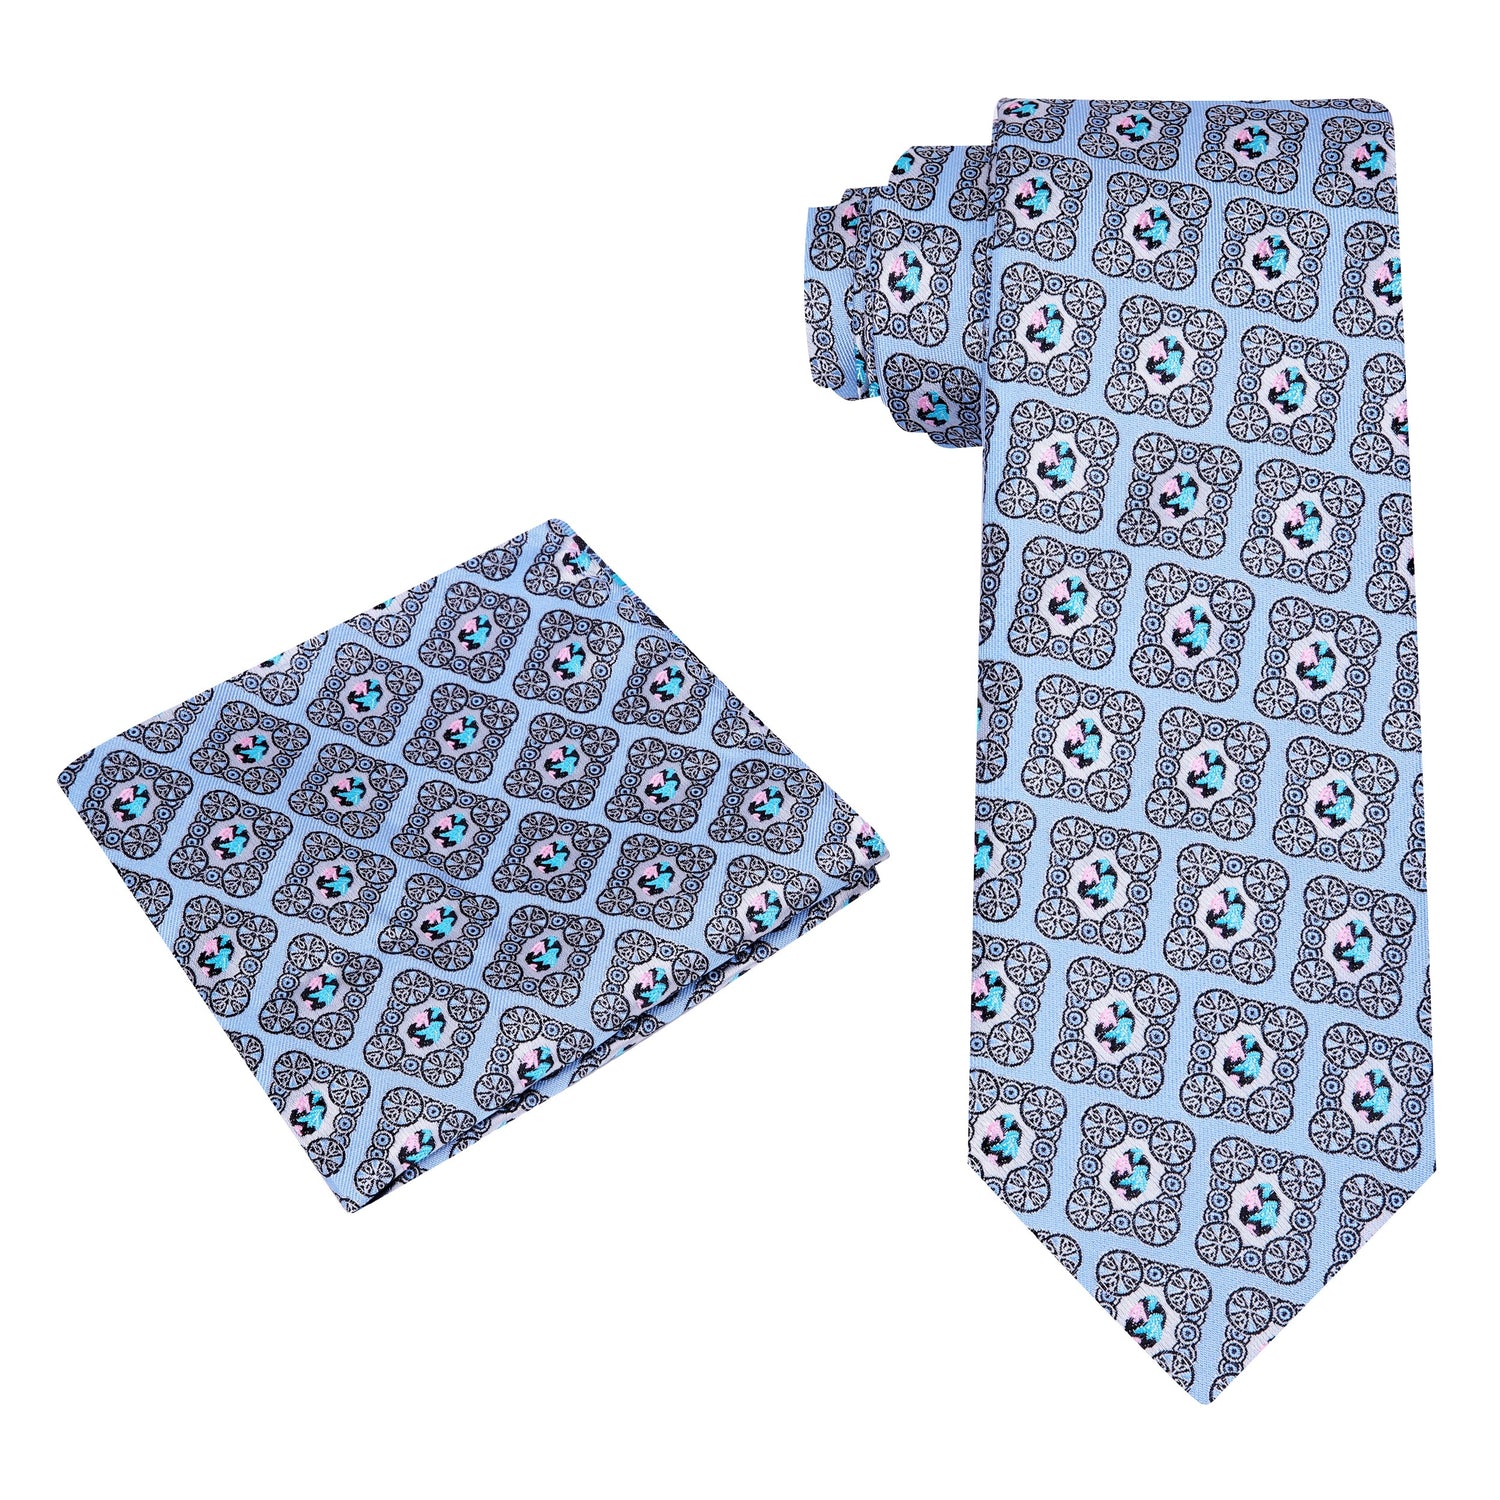 View 2: A Blue, Light Pink, Black Color Geometric Diamond Pattern Silk Necktie, Pocket Square